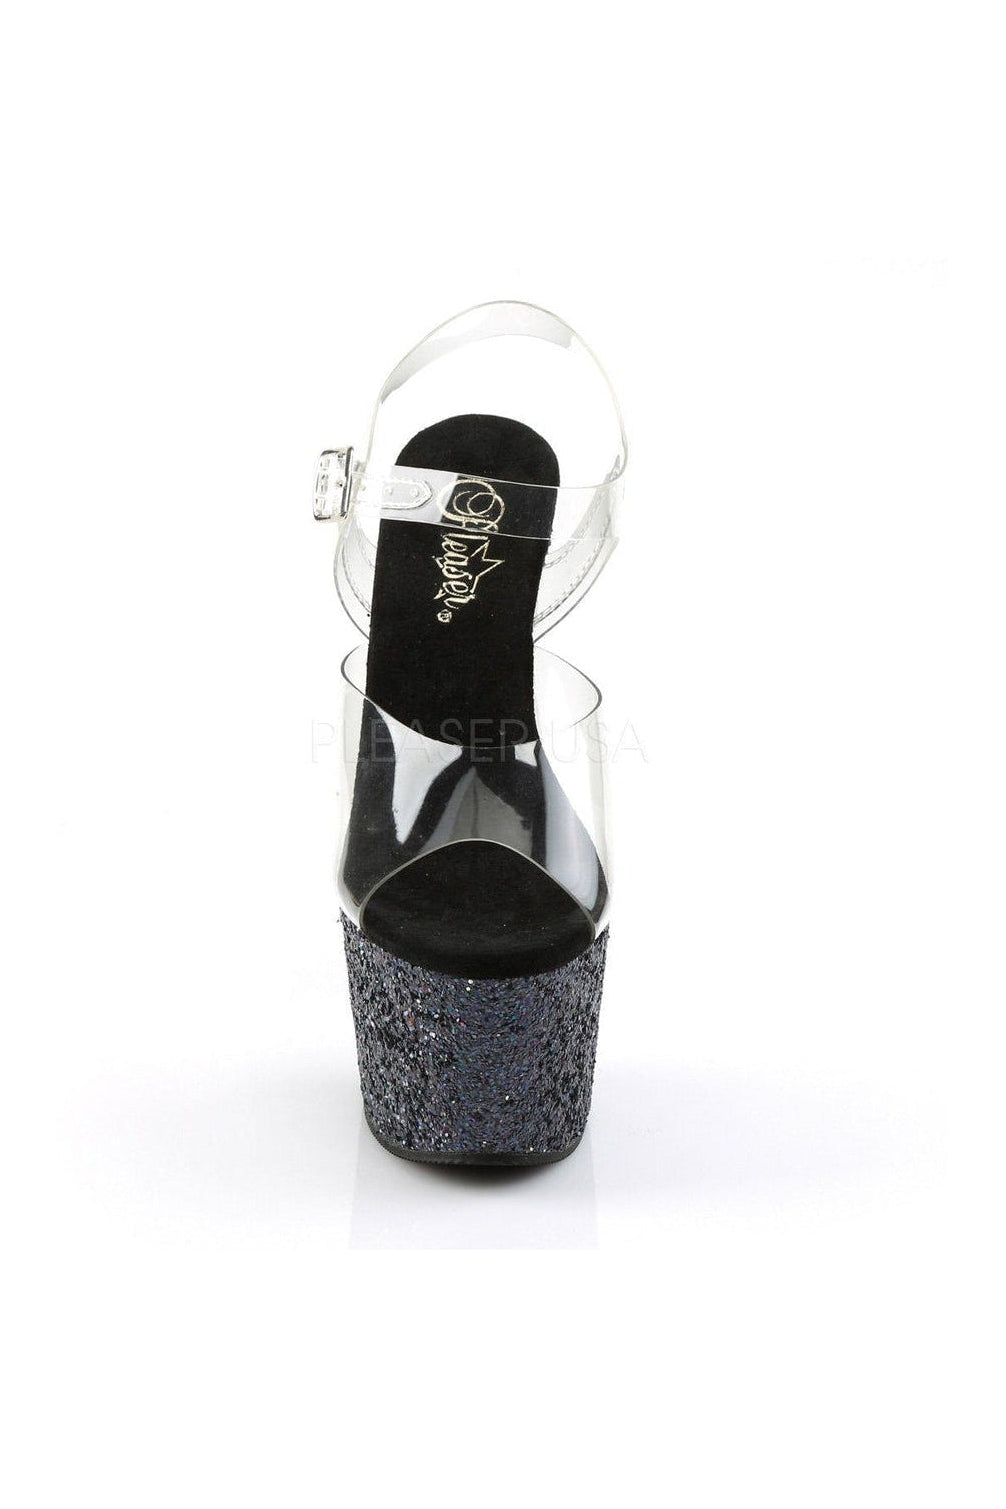 ADORE-708LG Platform Sandal | Black Vinyl-Pleaser-Sandals-SEXYSHOES.COM